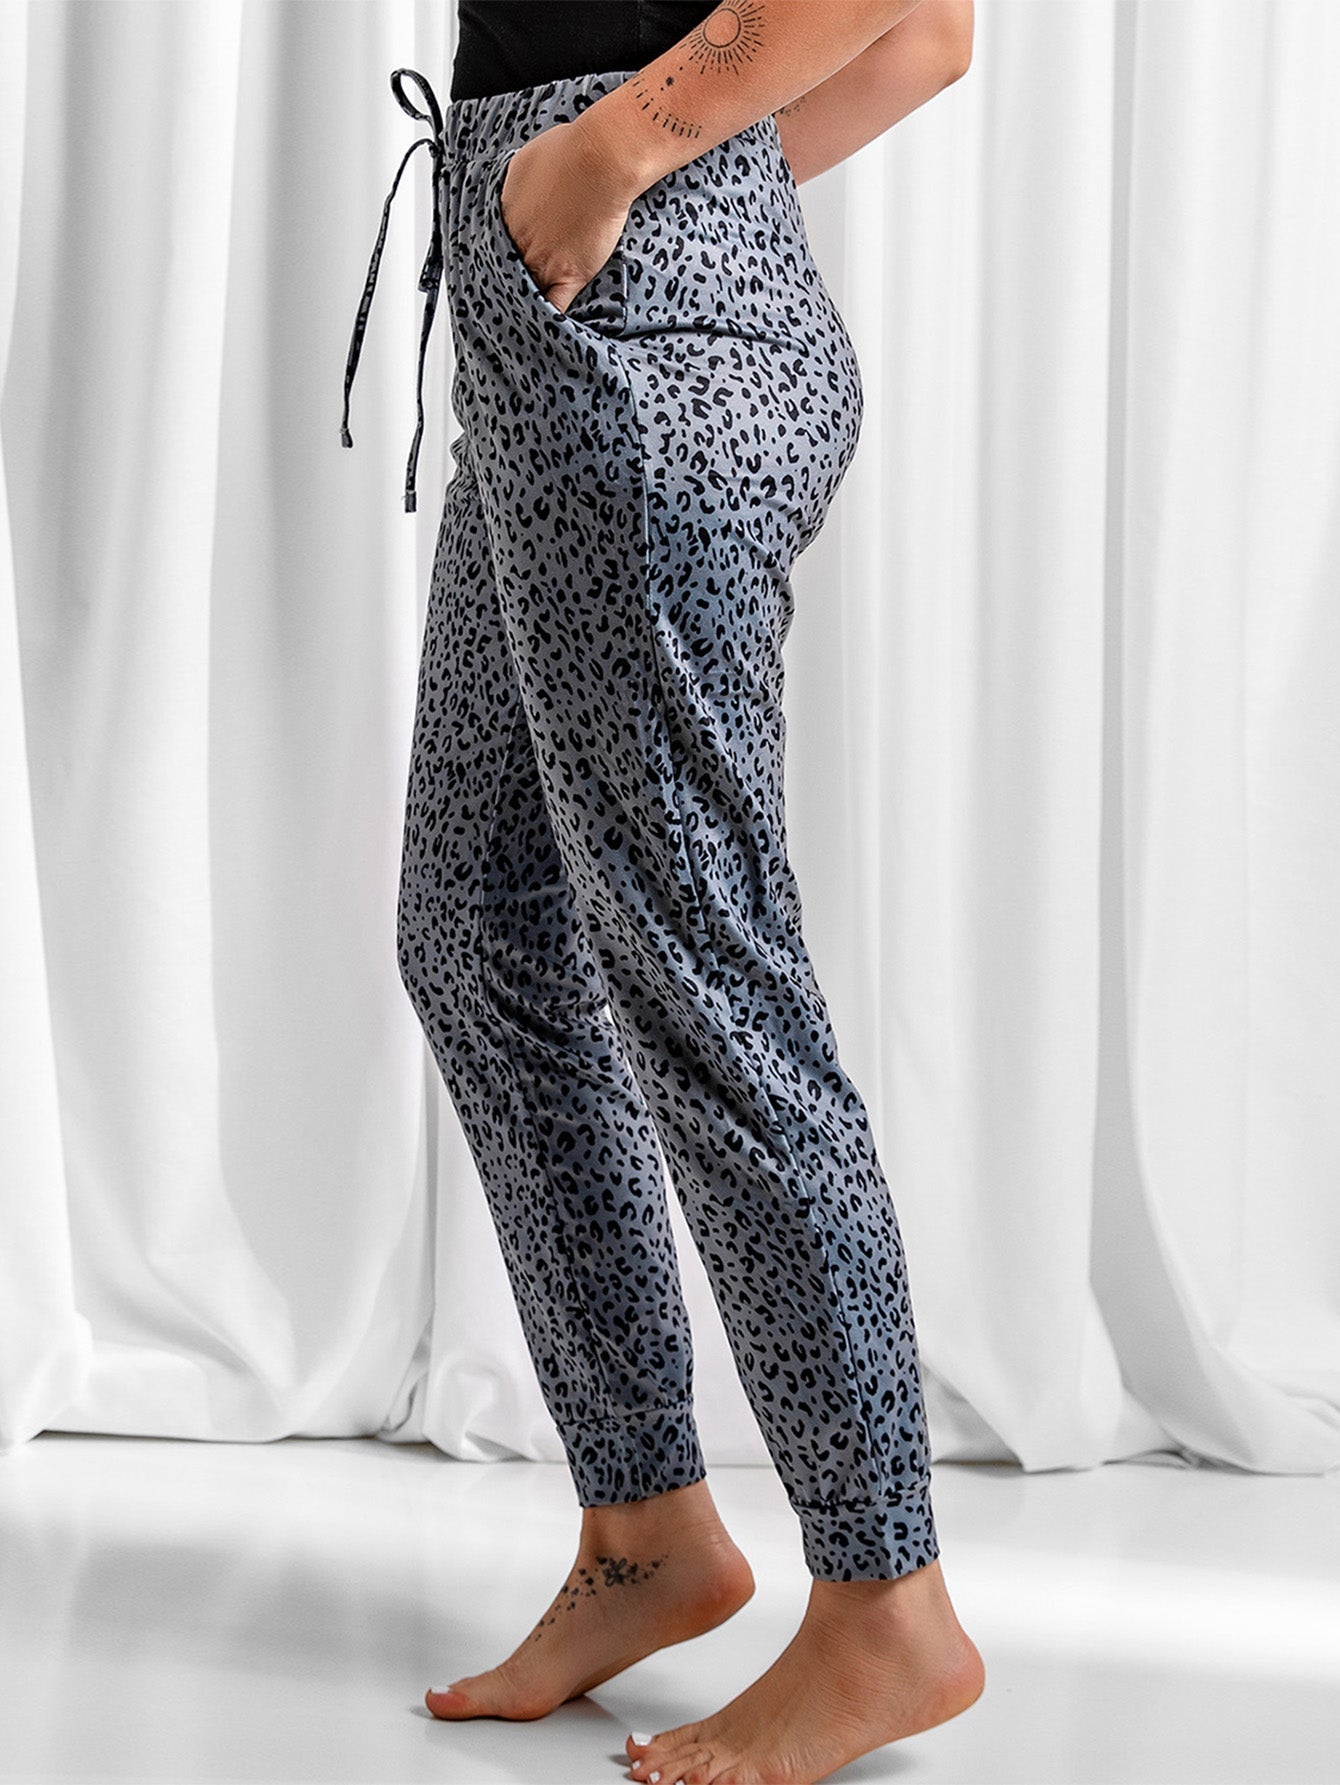 Breezy Leopard Sweatpants Side Pockets Elastic Waistline Cuffs Drawstring Loose Fit Casual Trousers Sai Feel